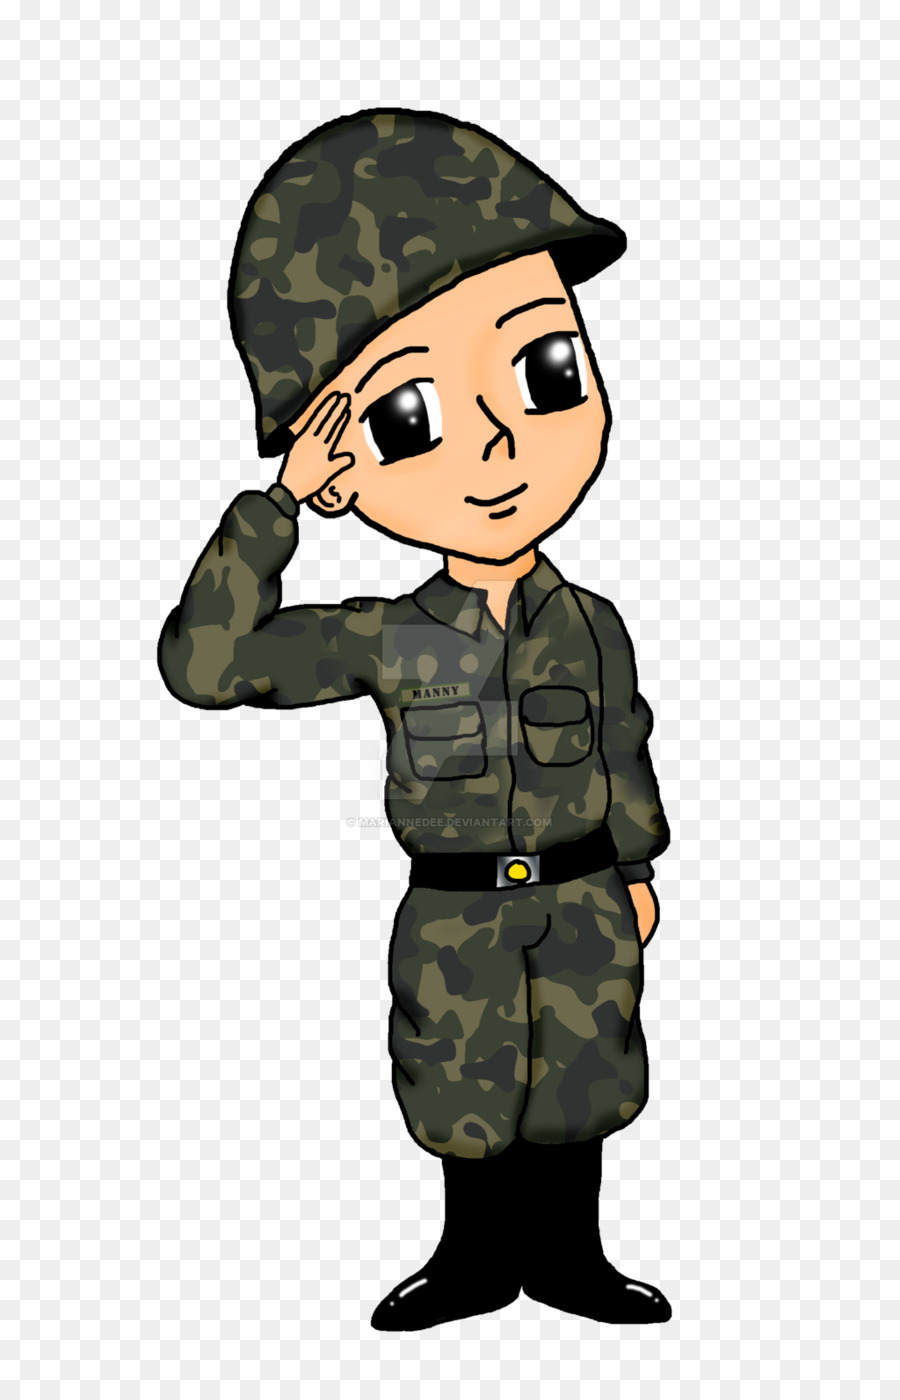 Soldier Cartoon clipart.